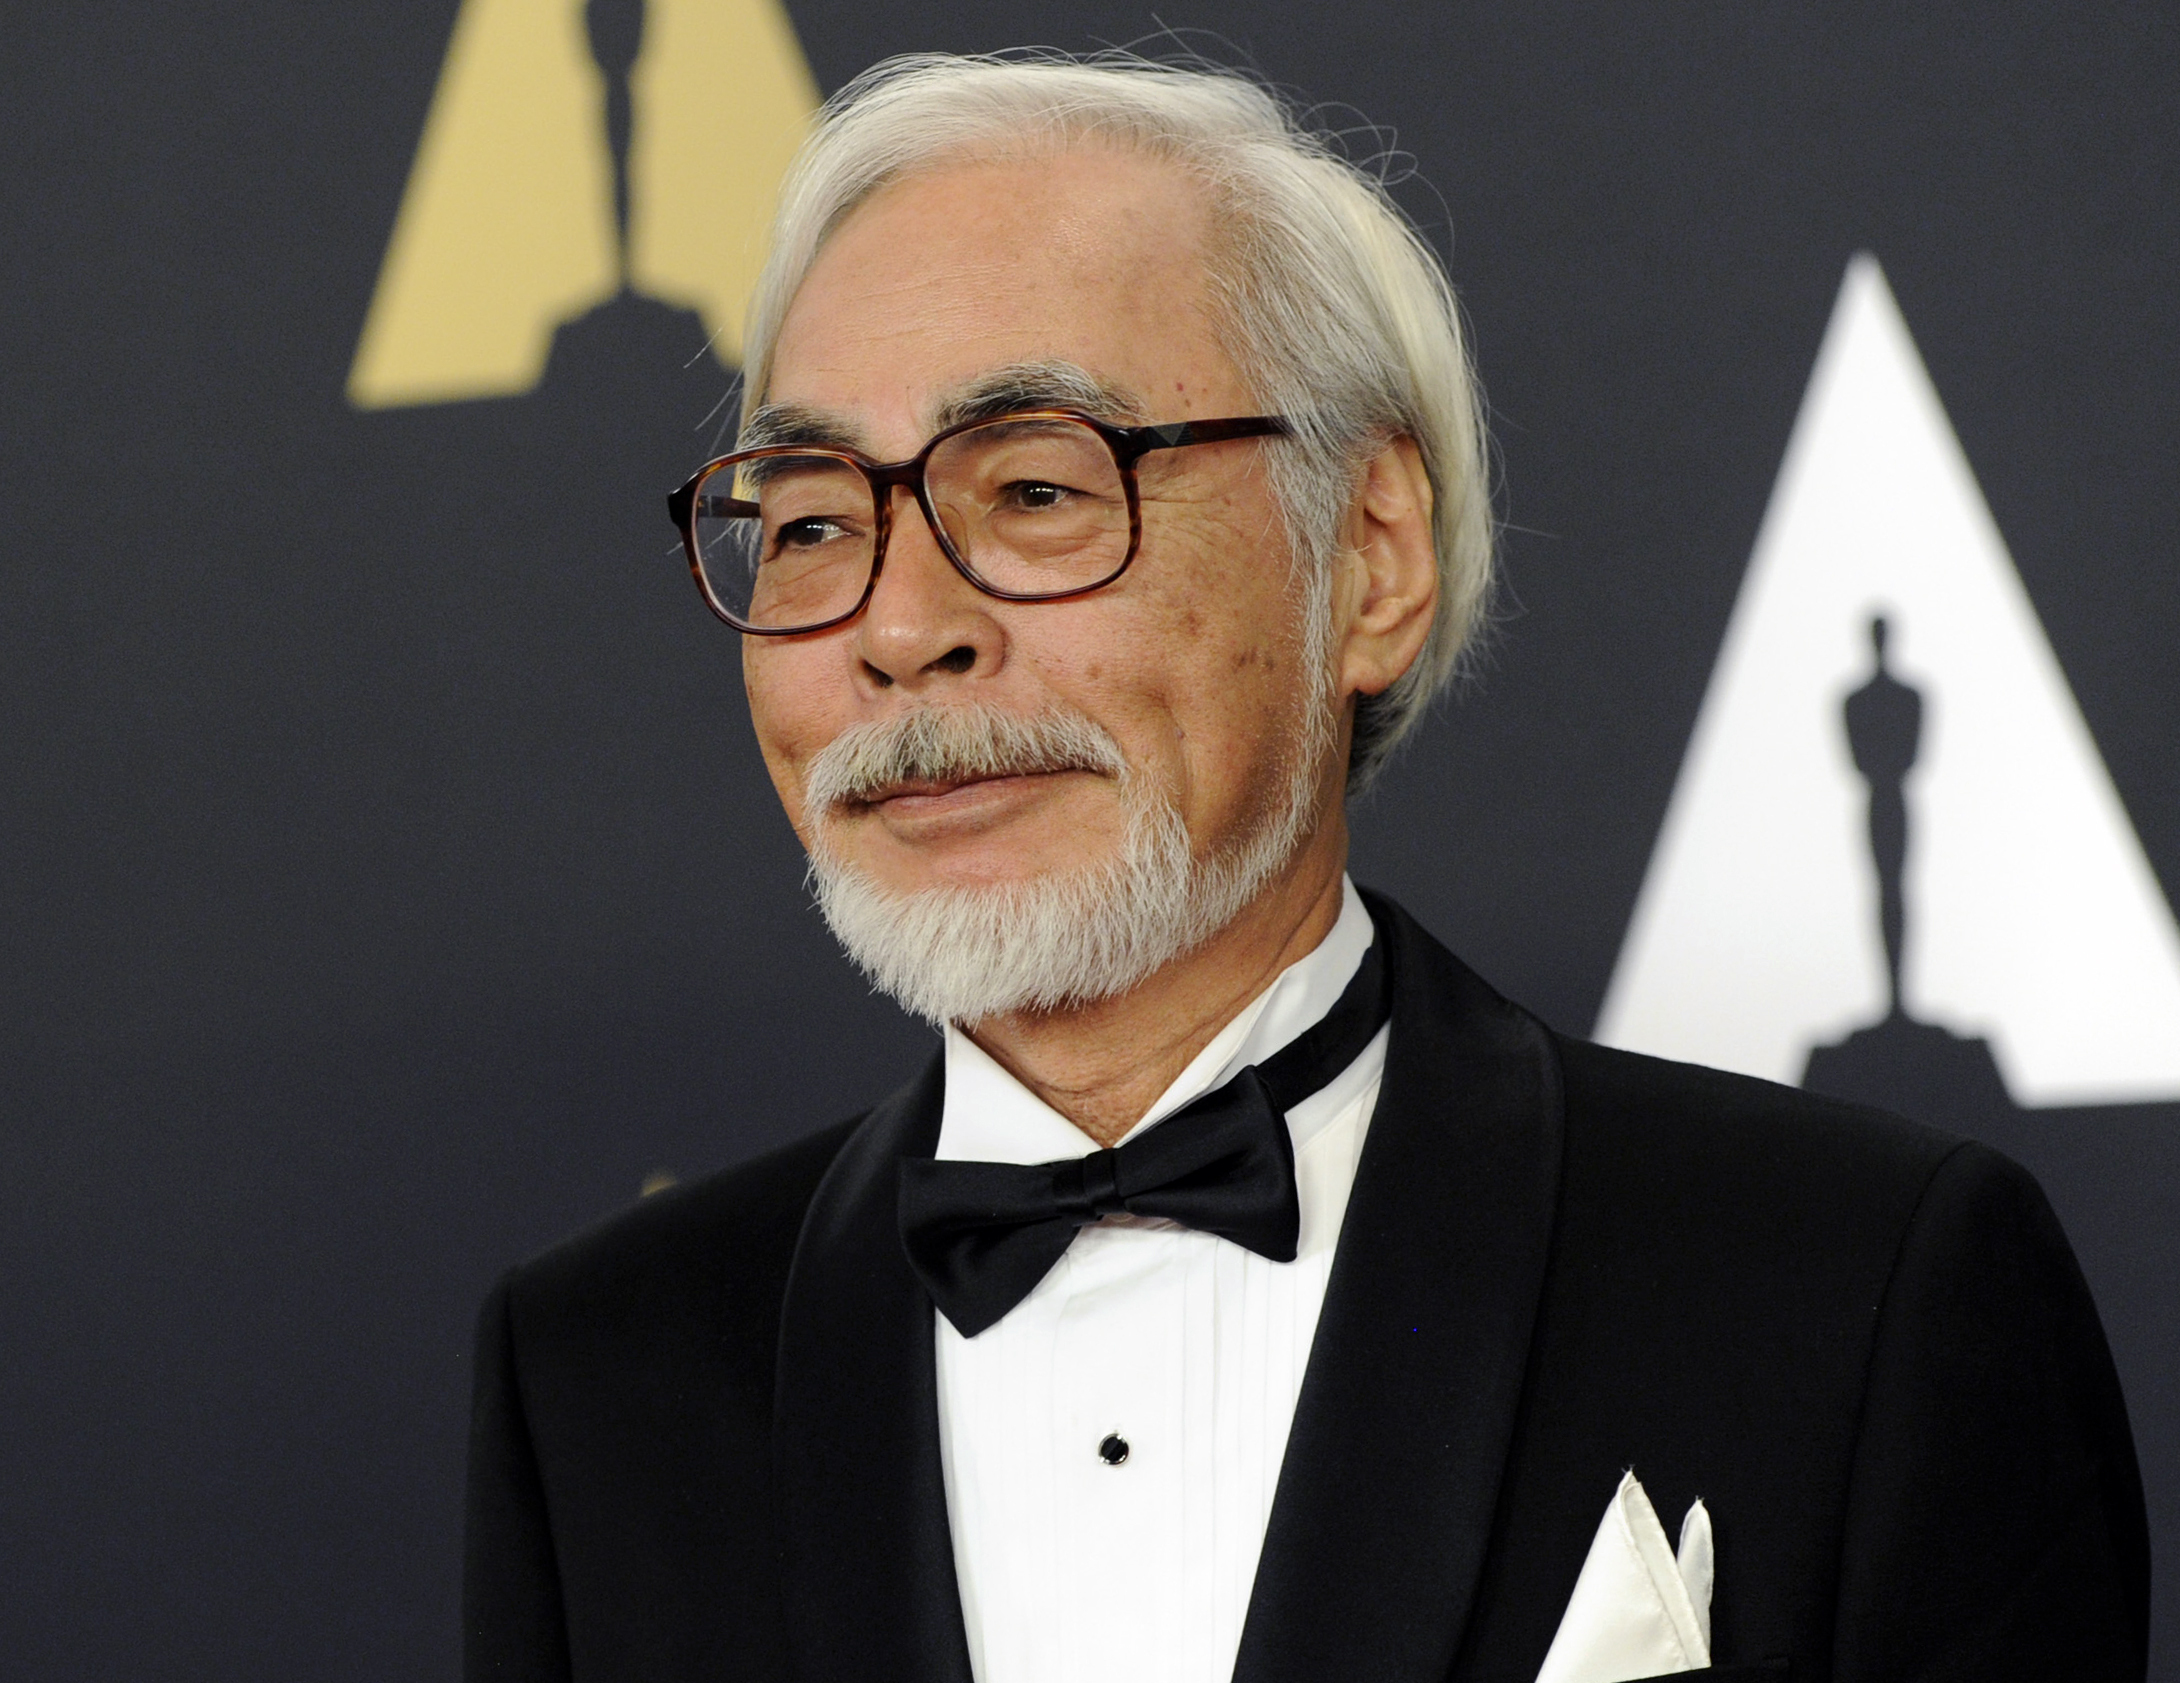 Japanese anime master Miyazaki's likely final film opens